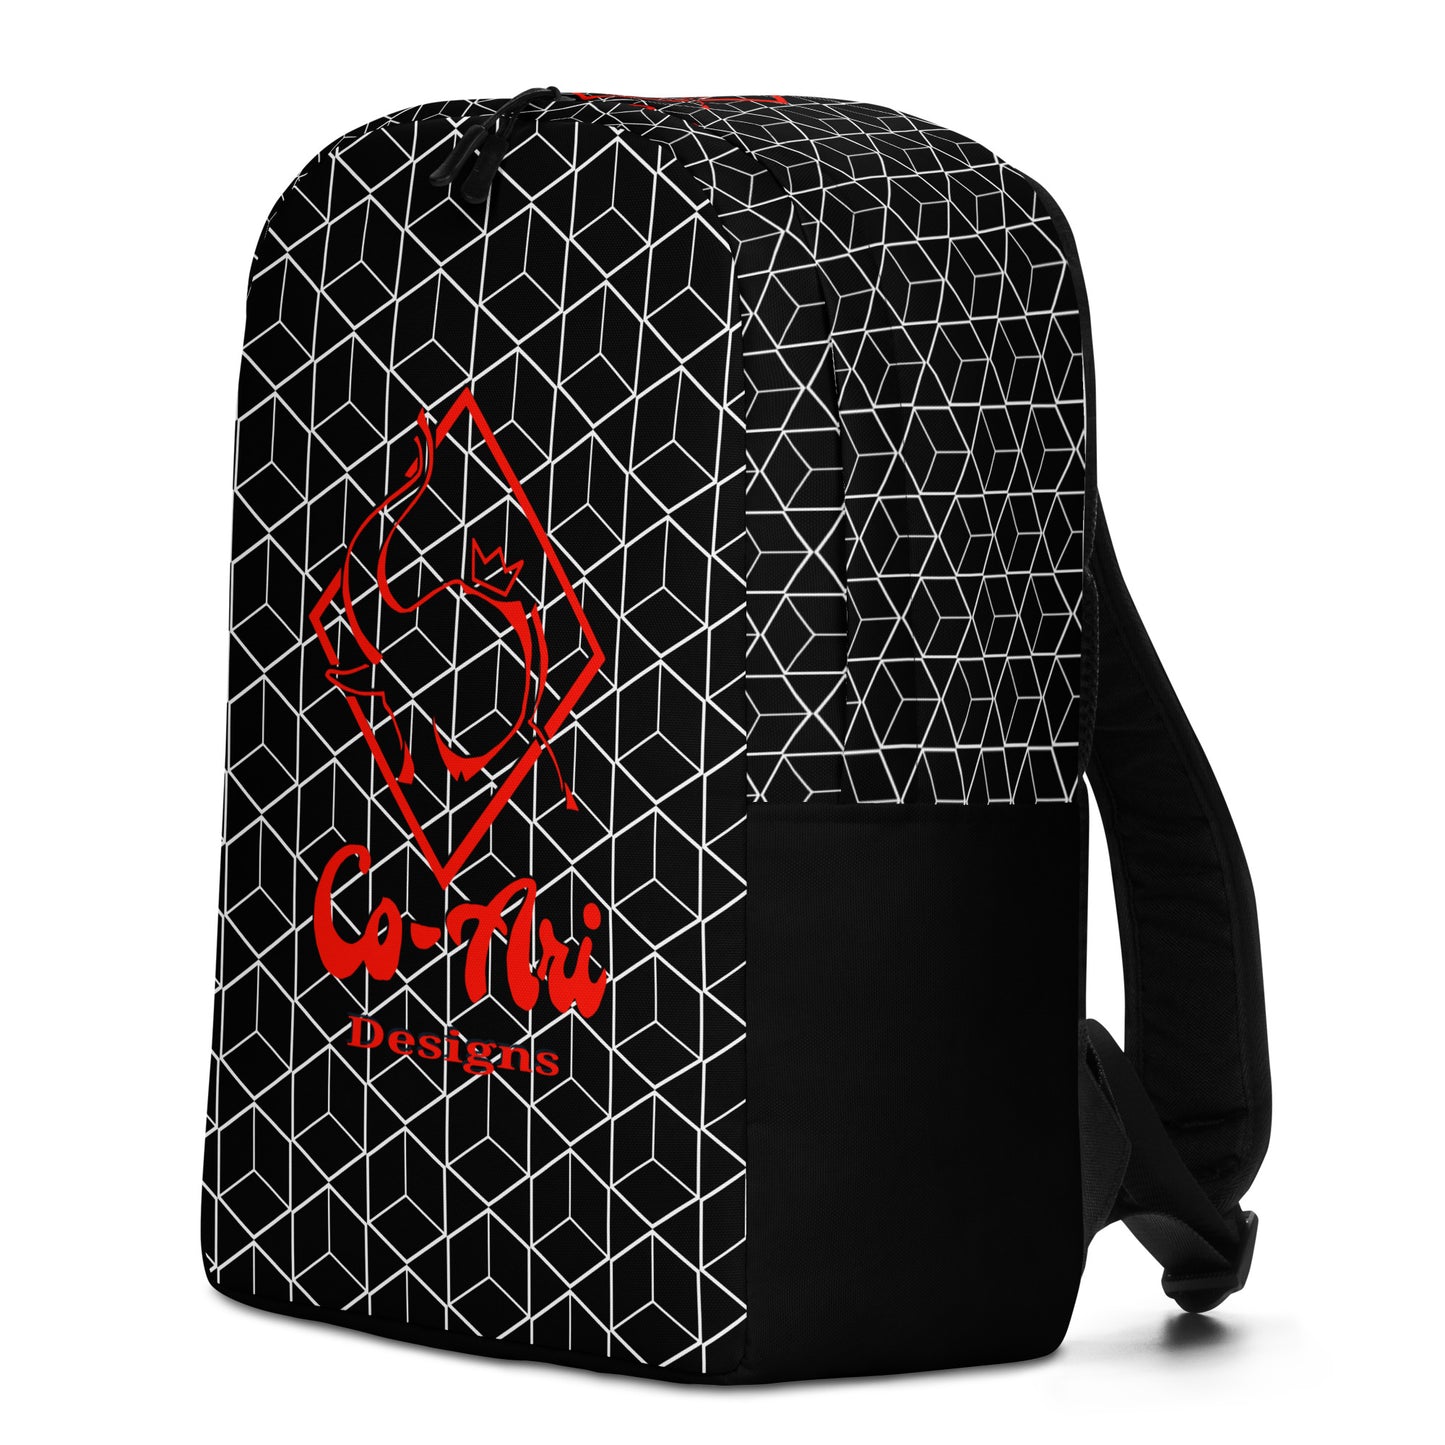 Co-Ari Designs Backpack